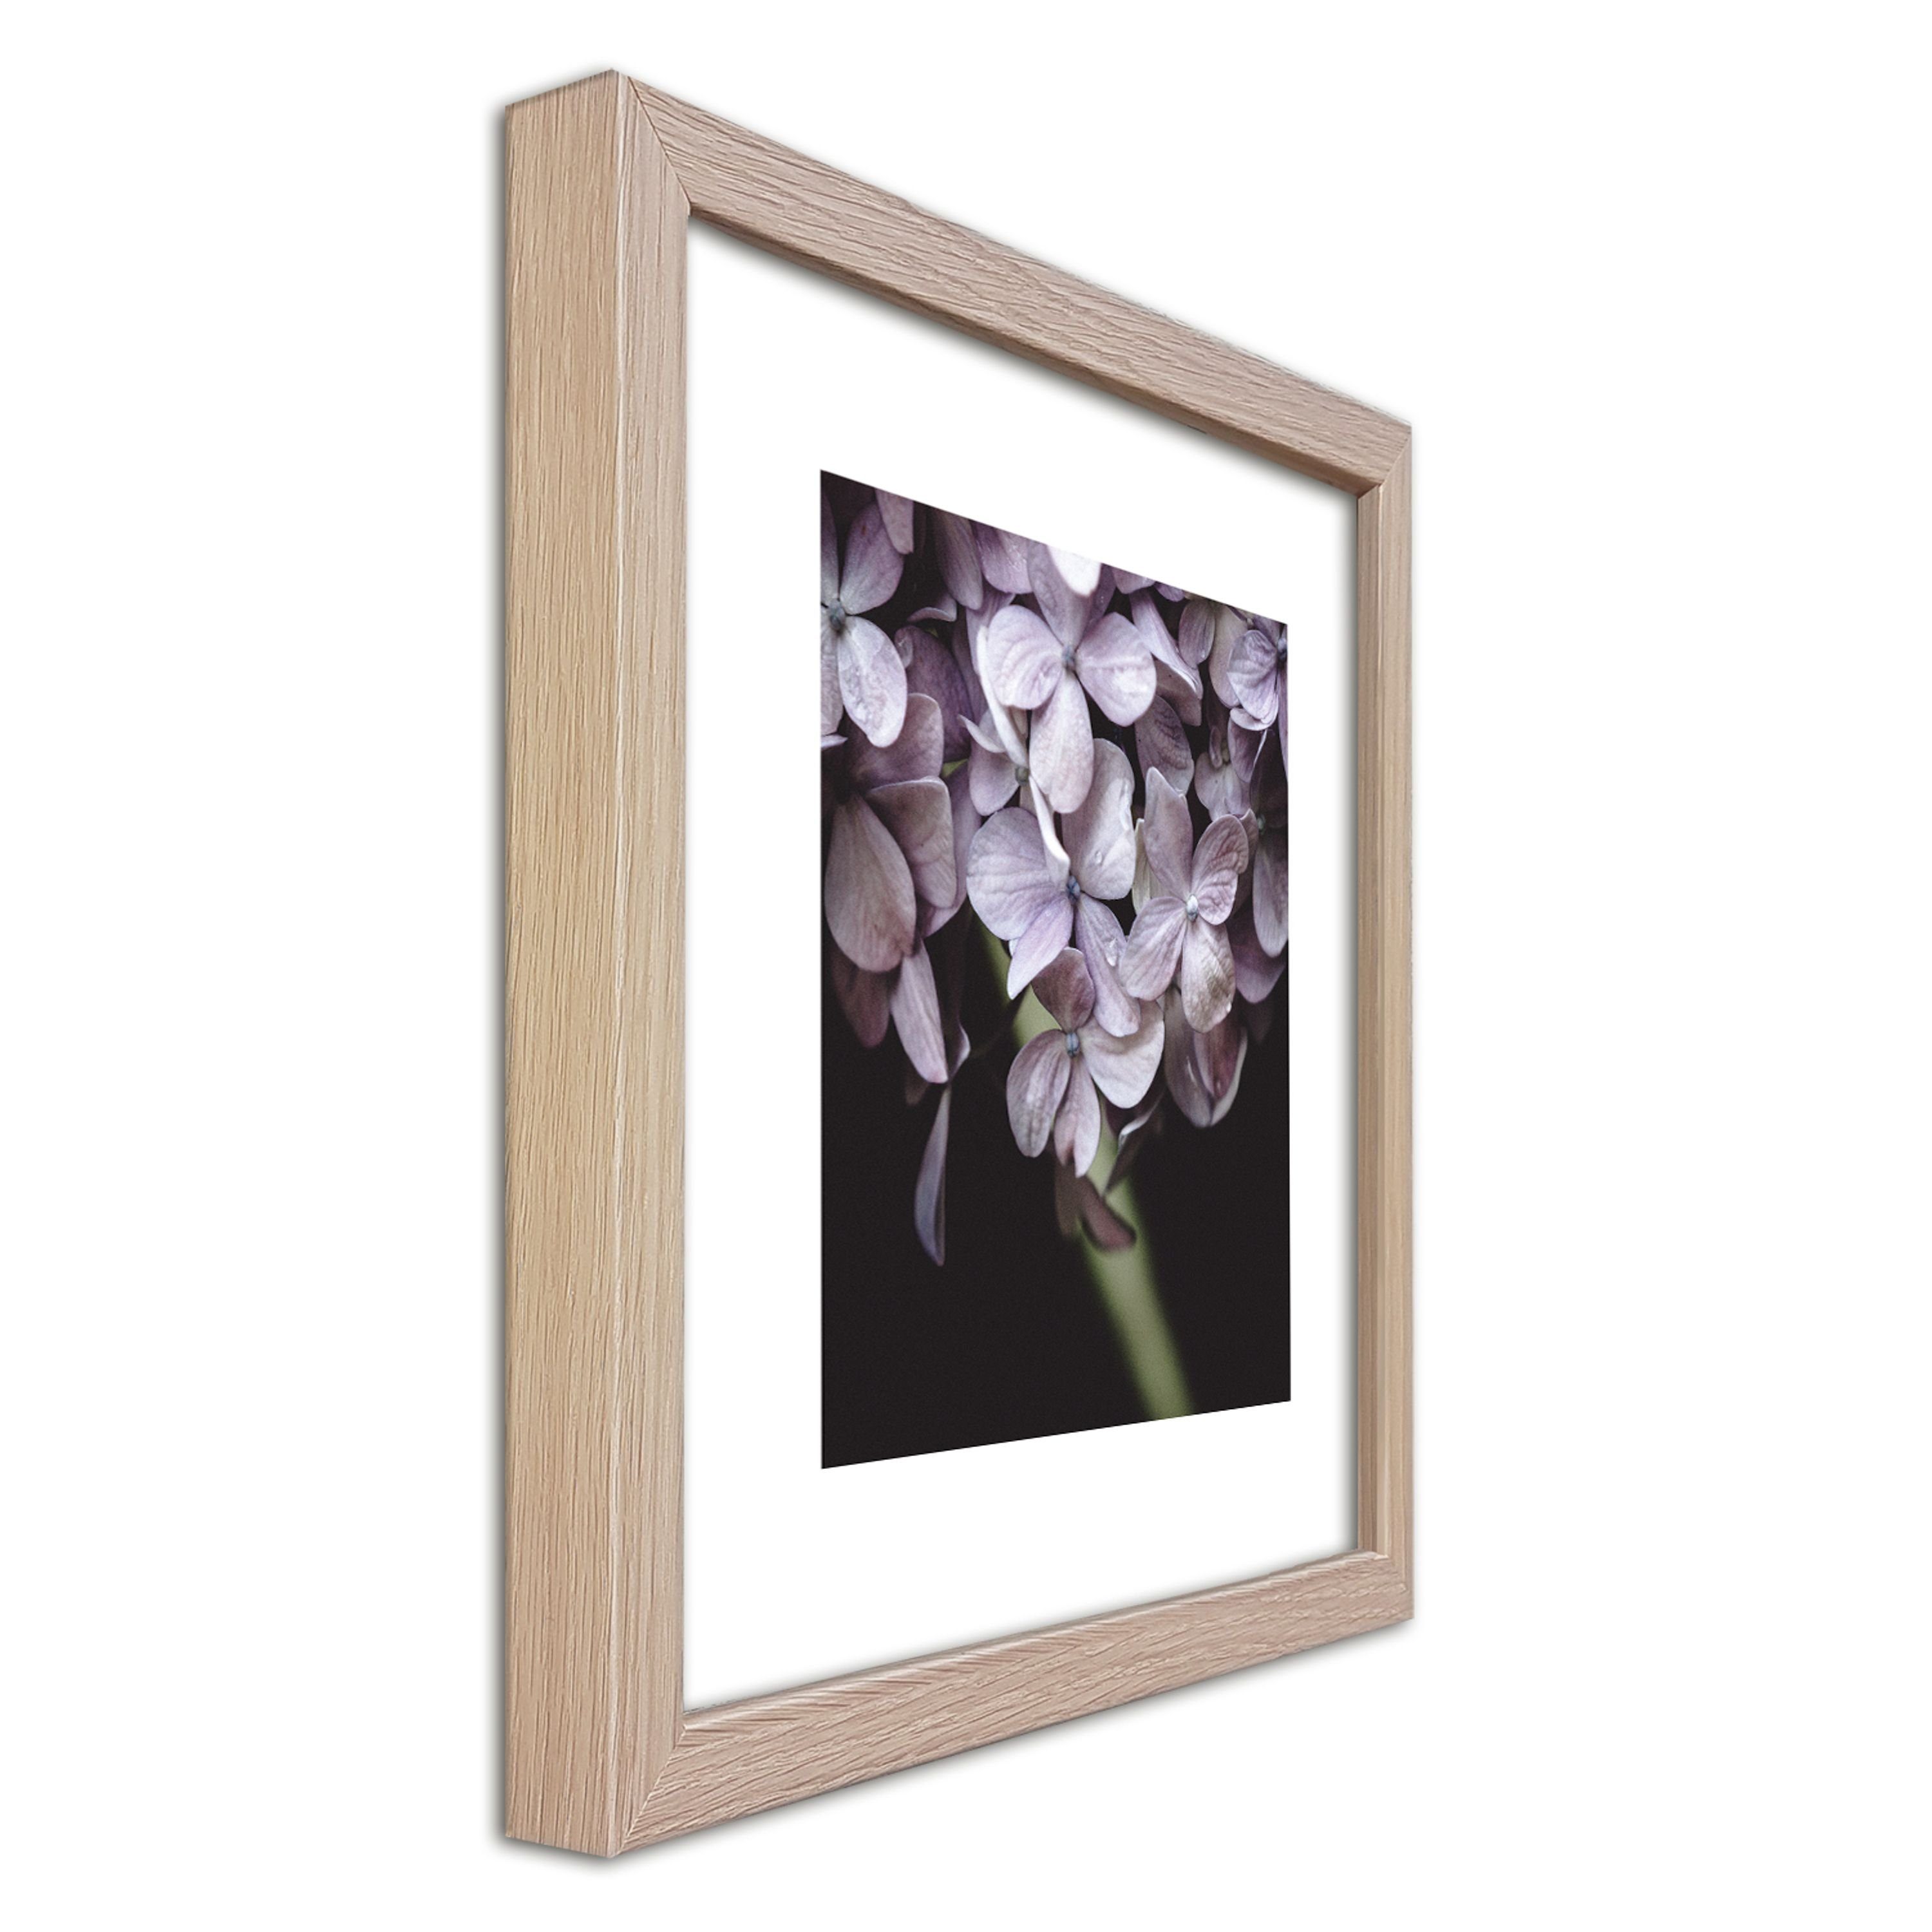 inkl. artissimo Holz-Rahmen / Wandbild, II Bild 30x30cm Lila Rahmen gerahmt Blumen: / mit Design-Poster Bild Blüten